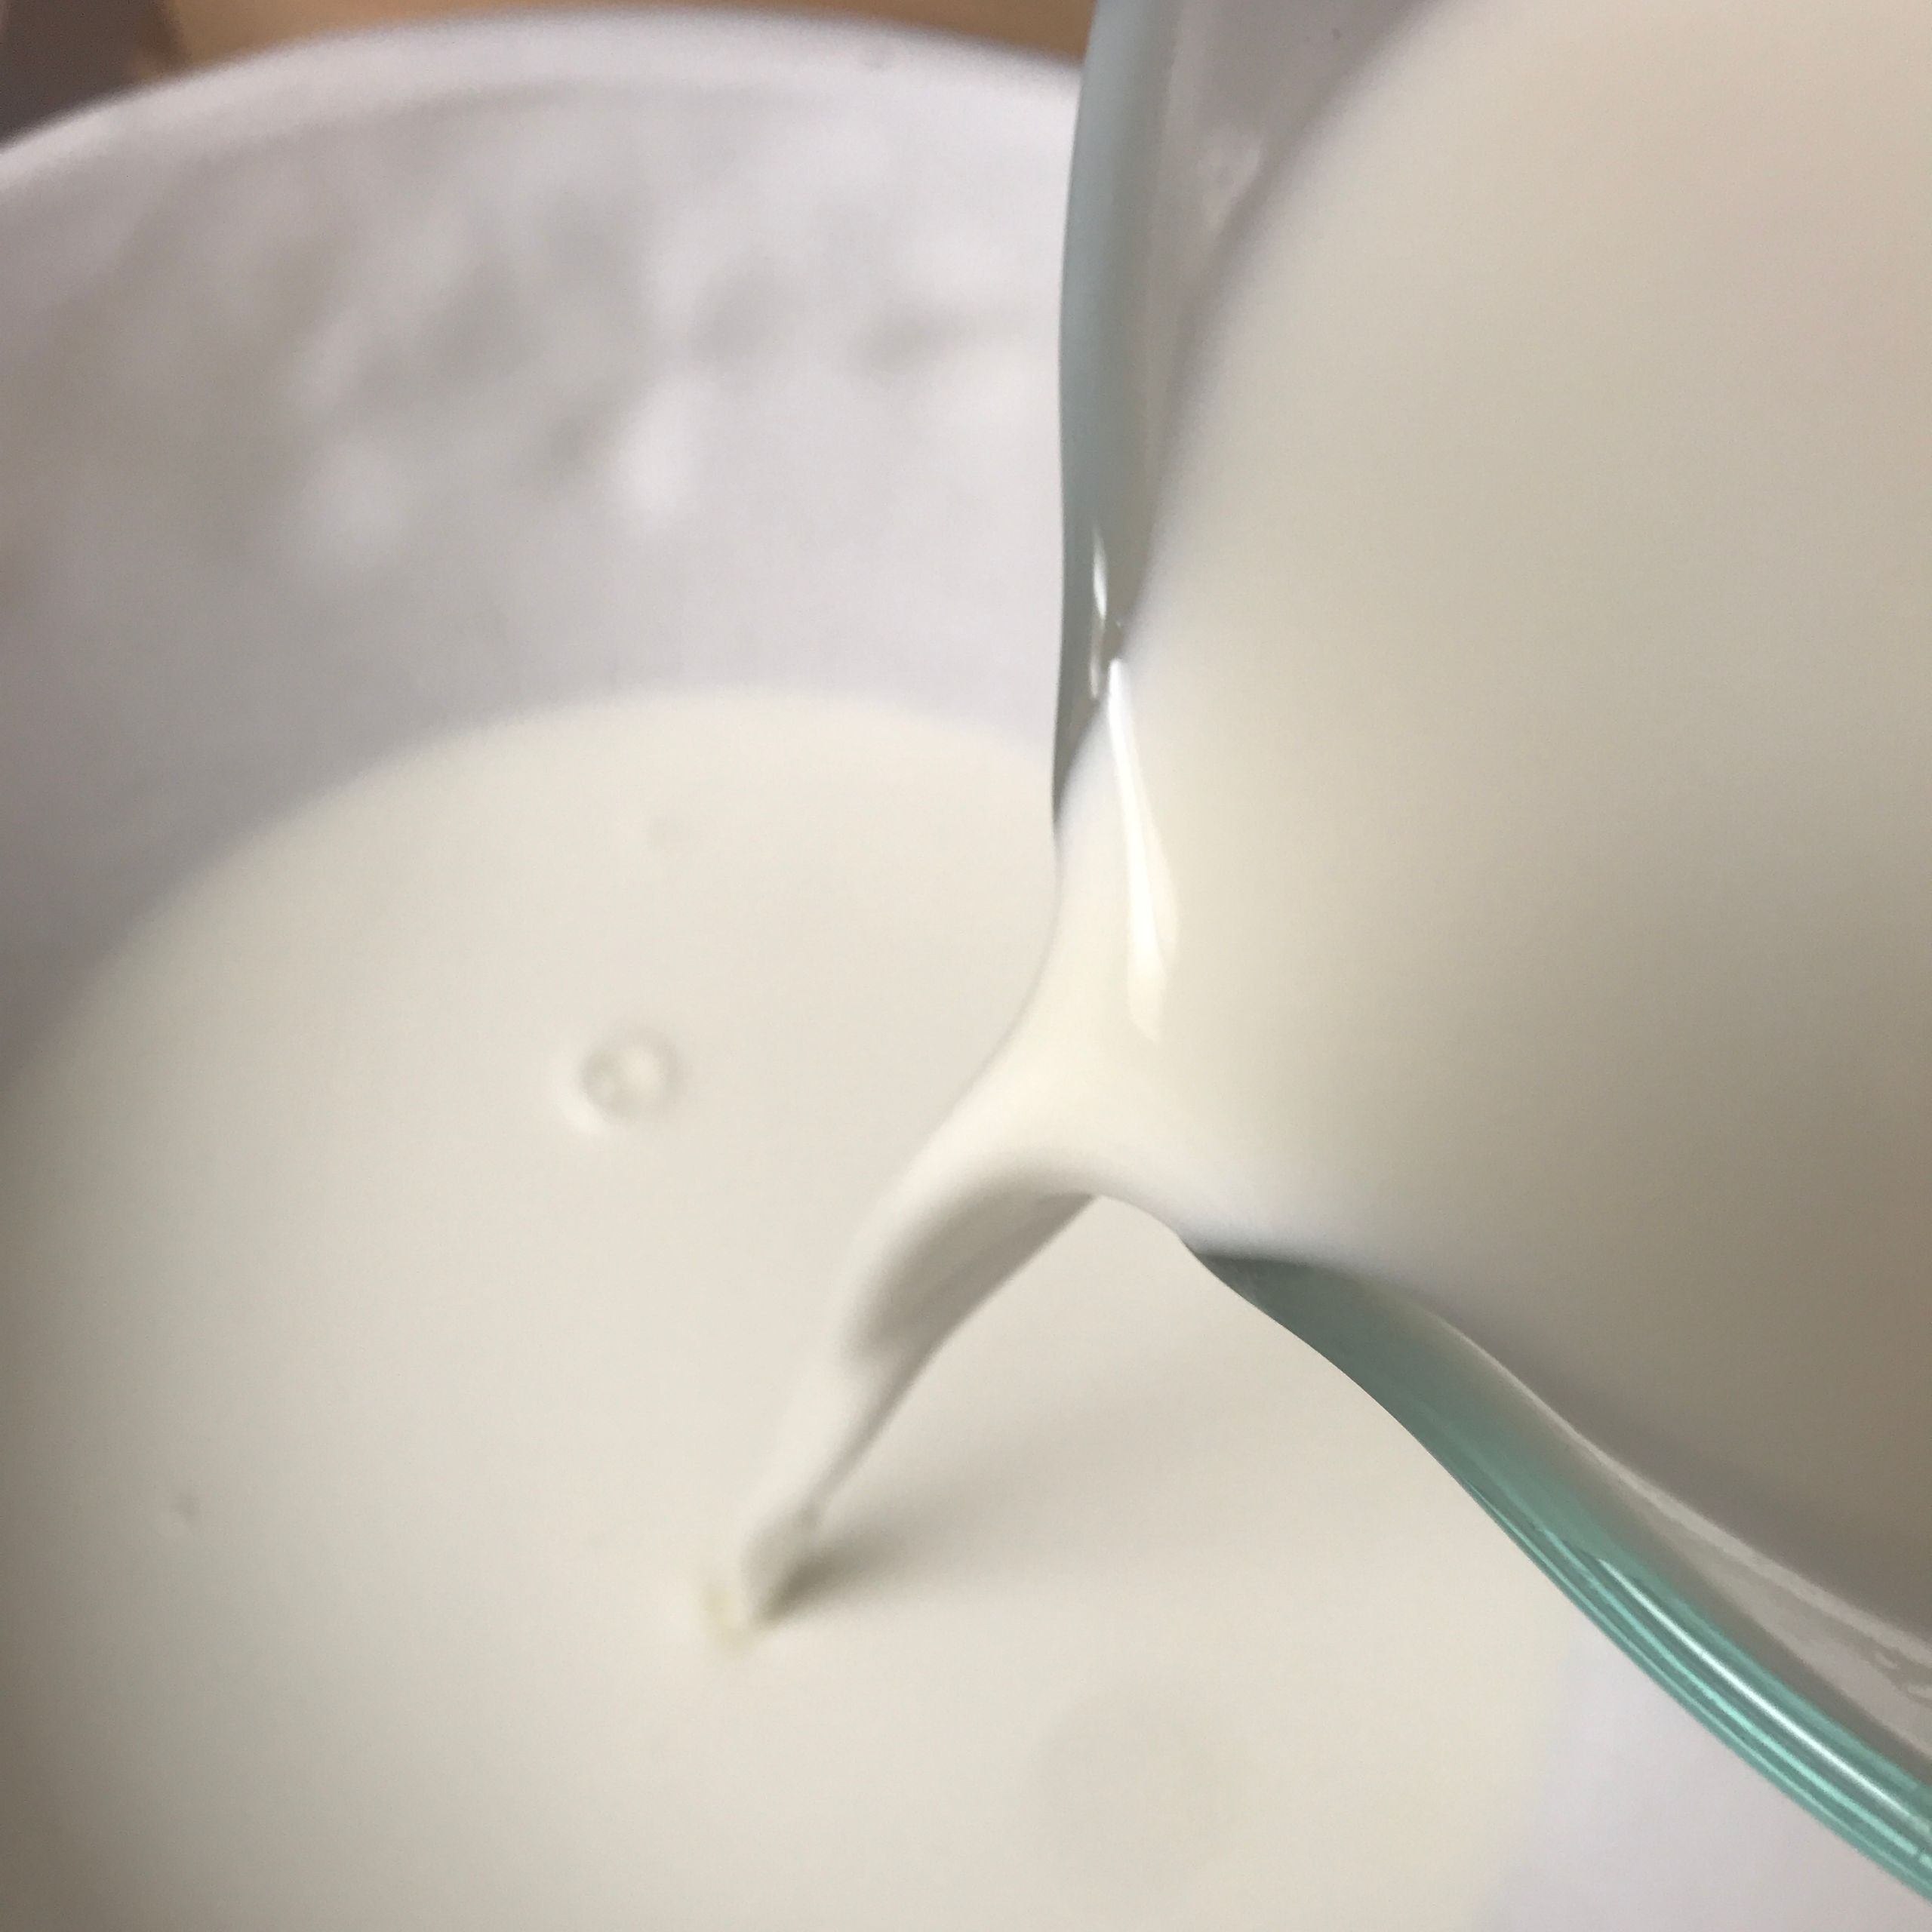 Pouring cream into bowl